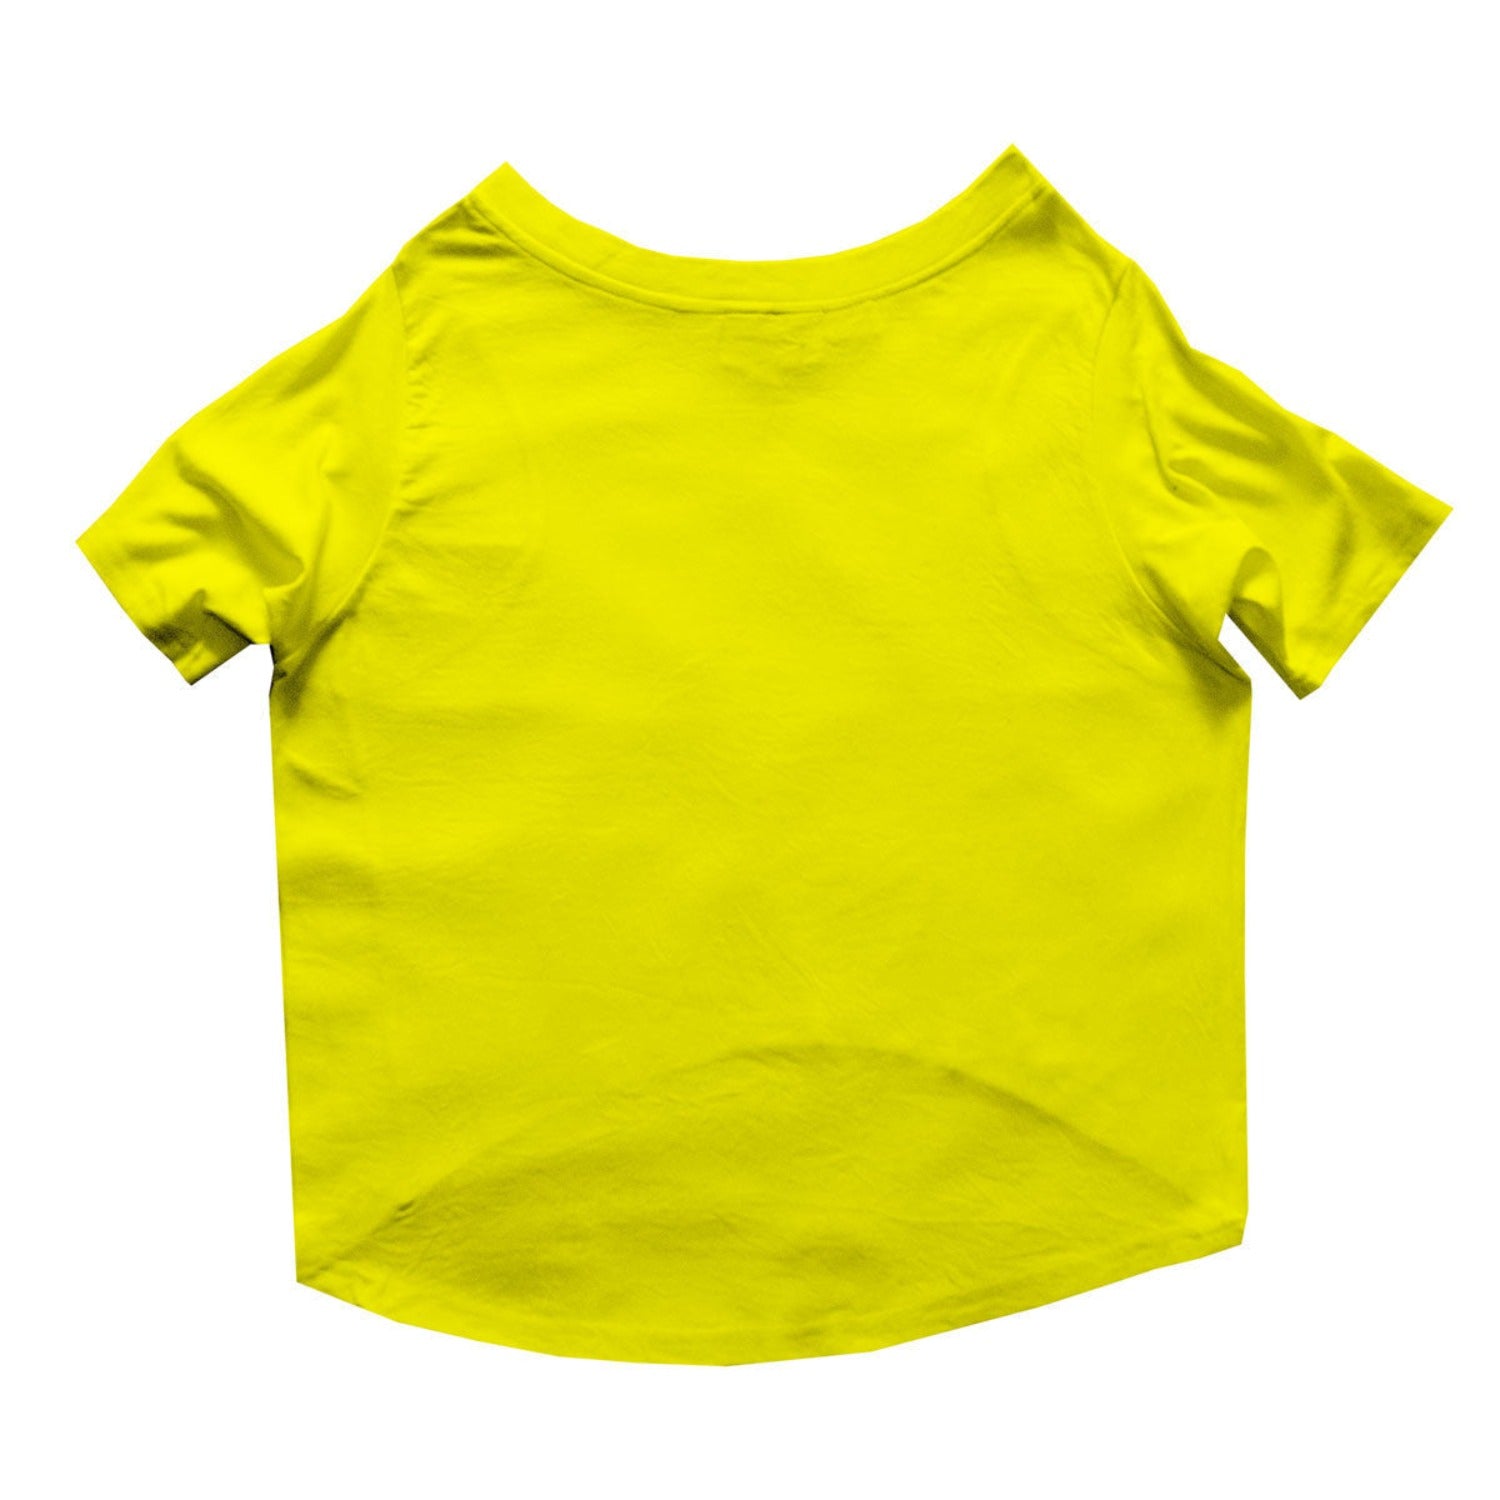 Ruse / Yellow Ruse Basic Crew Neck "CALI SKATER" Printed Half Sleeves Dog Tee18